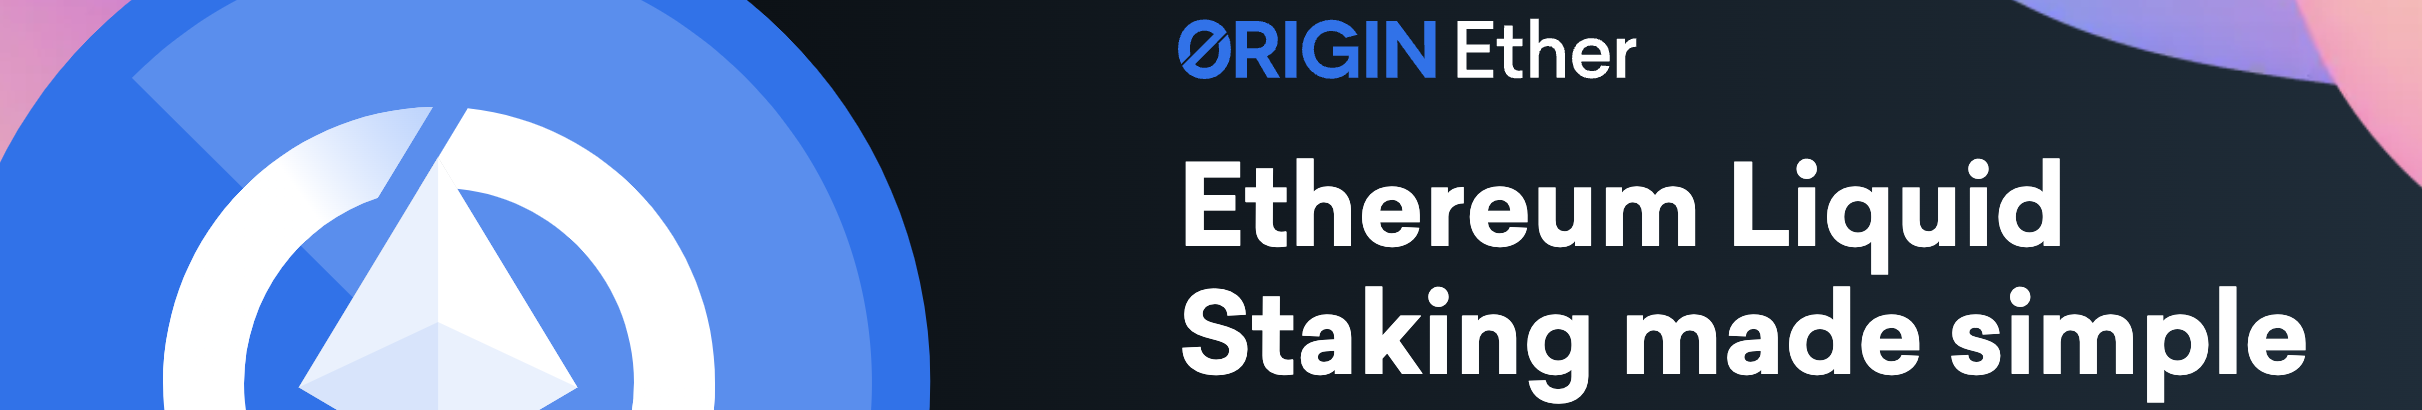 Origin Ether banner marketing image